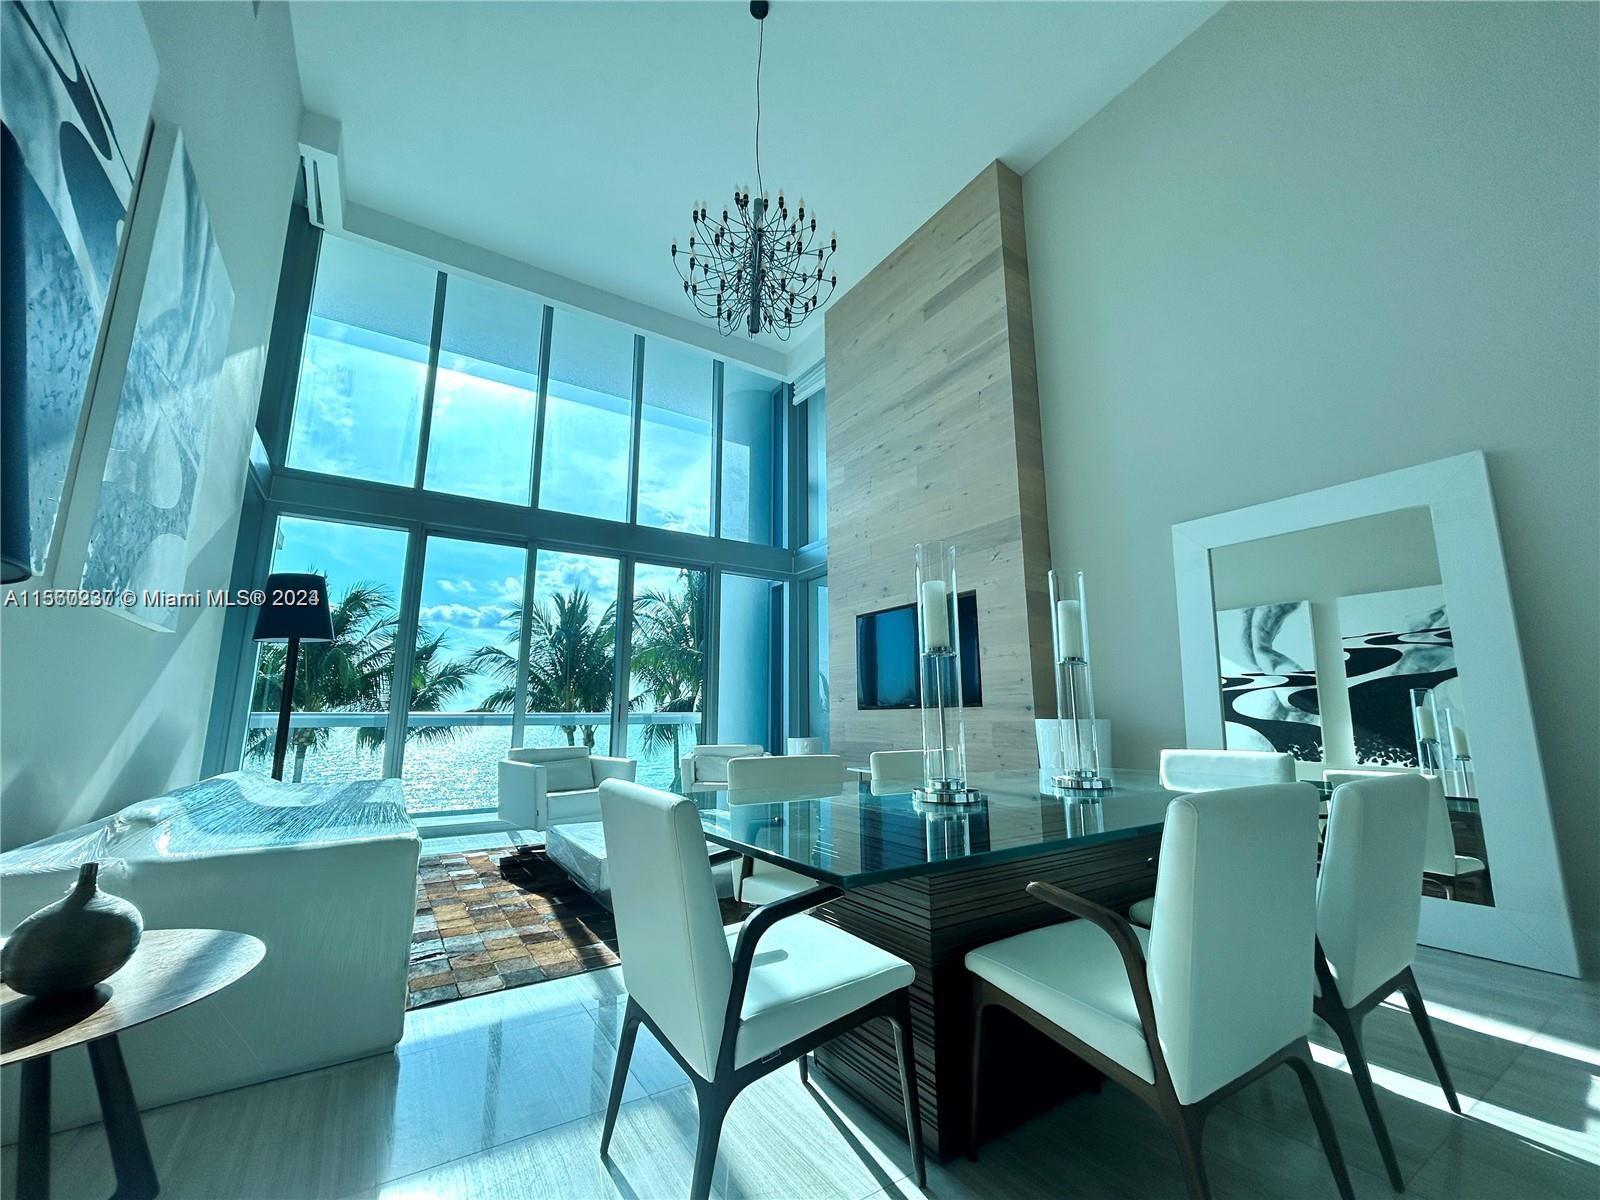 Rental Property at 6899 Collins Ave 404, Miami Beach, Miami-Dade County, Florida - Bedrooms: 3 
Bathrooms: 4  - $23,000 MO.